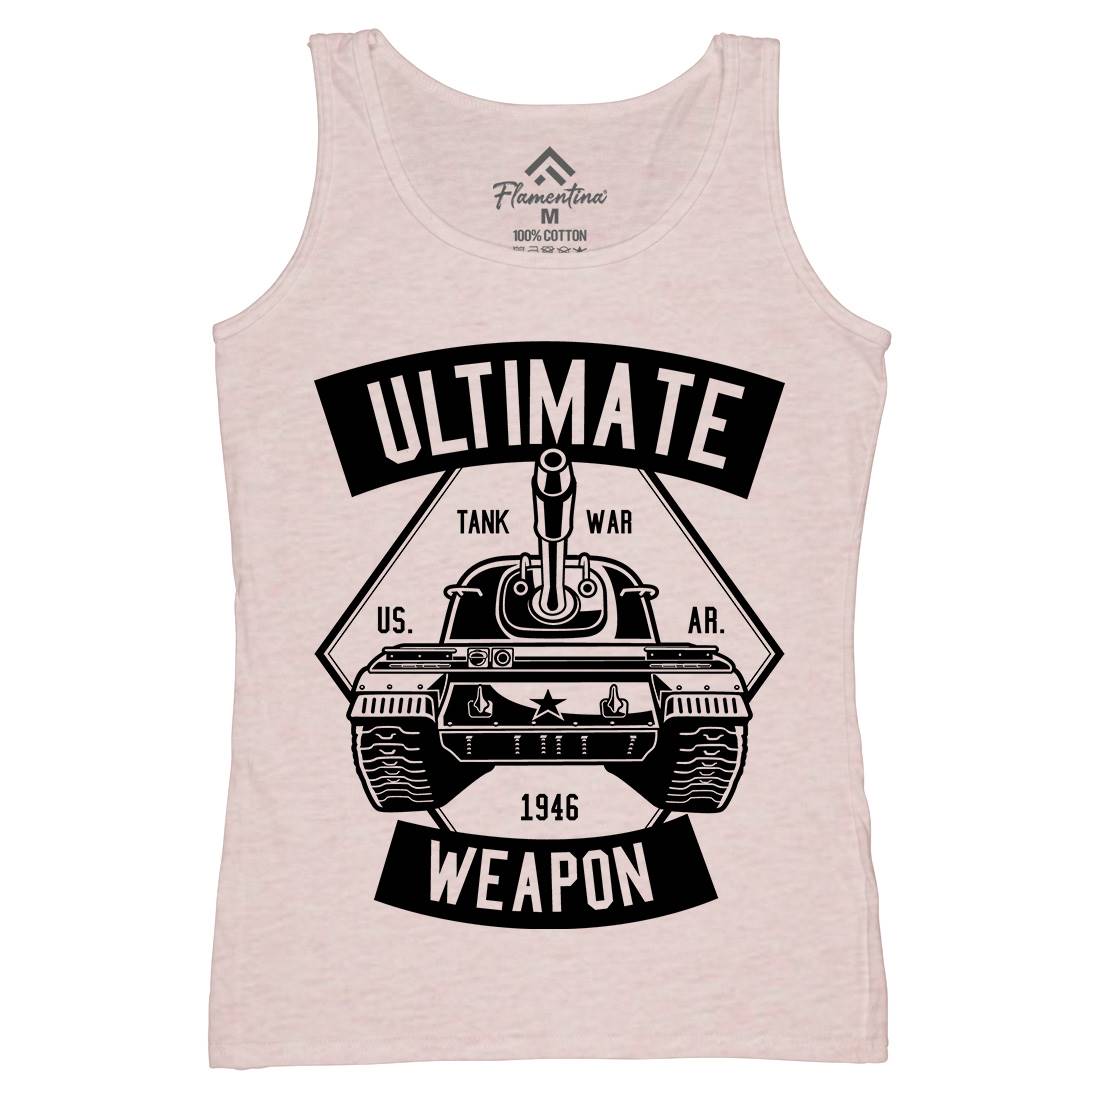 Tank War Ultimate Weapon Womens Organic Tank Top Vest Army B649